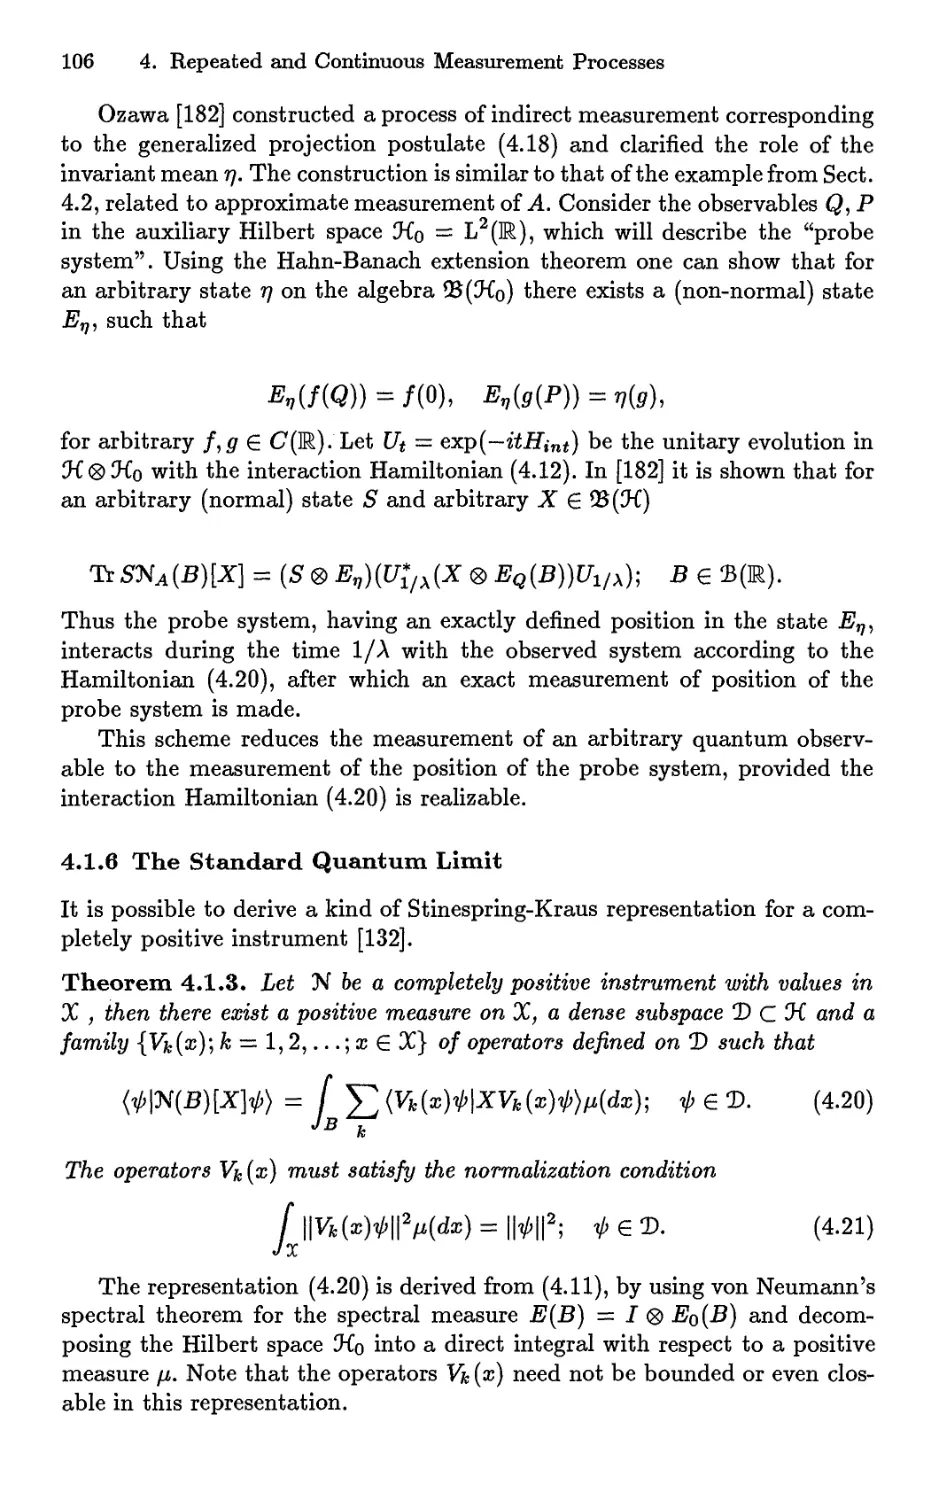 4.1.6 The Standard Quantum Limit